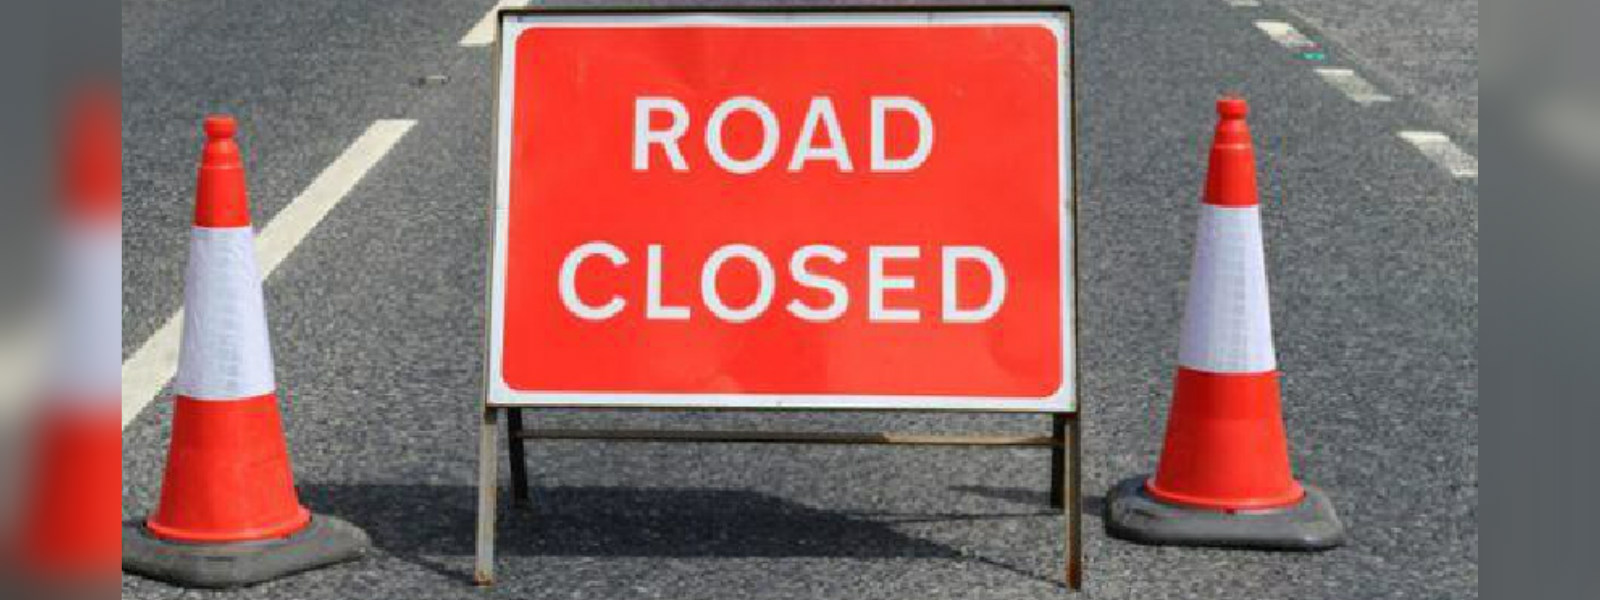 Lotus Road temporarily closed